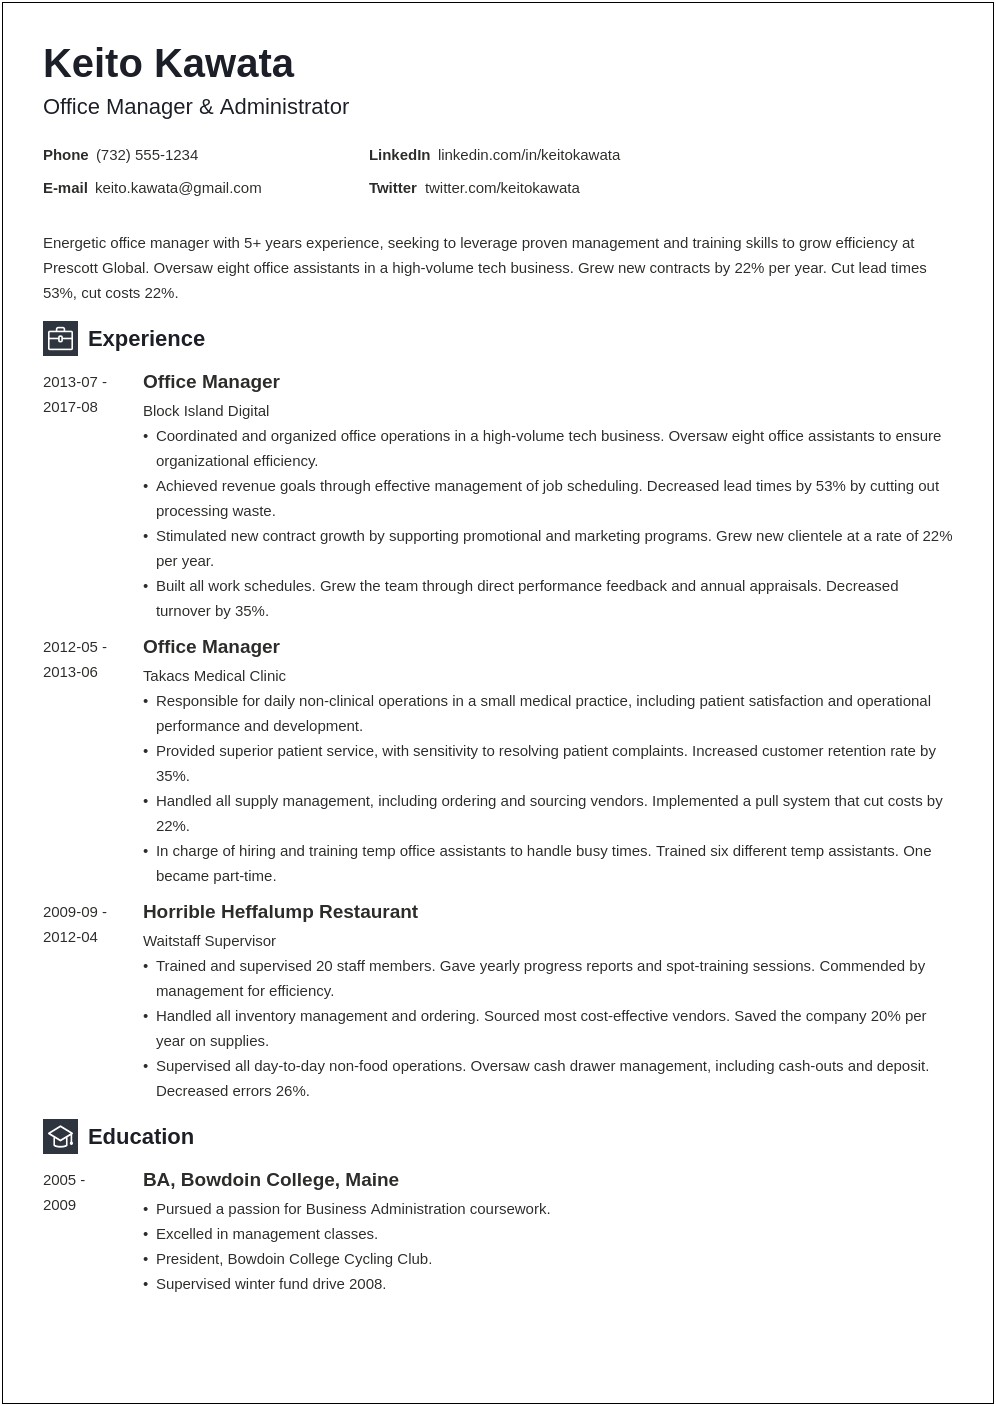 Resume Description For Training New Employees